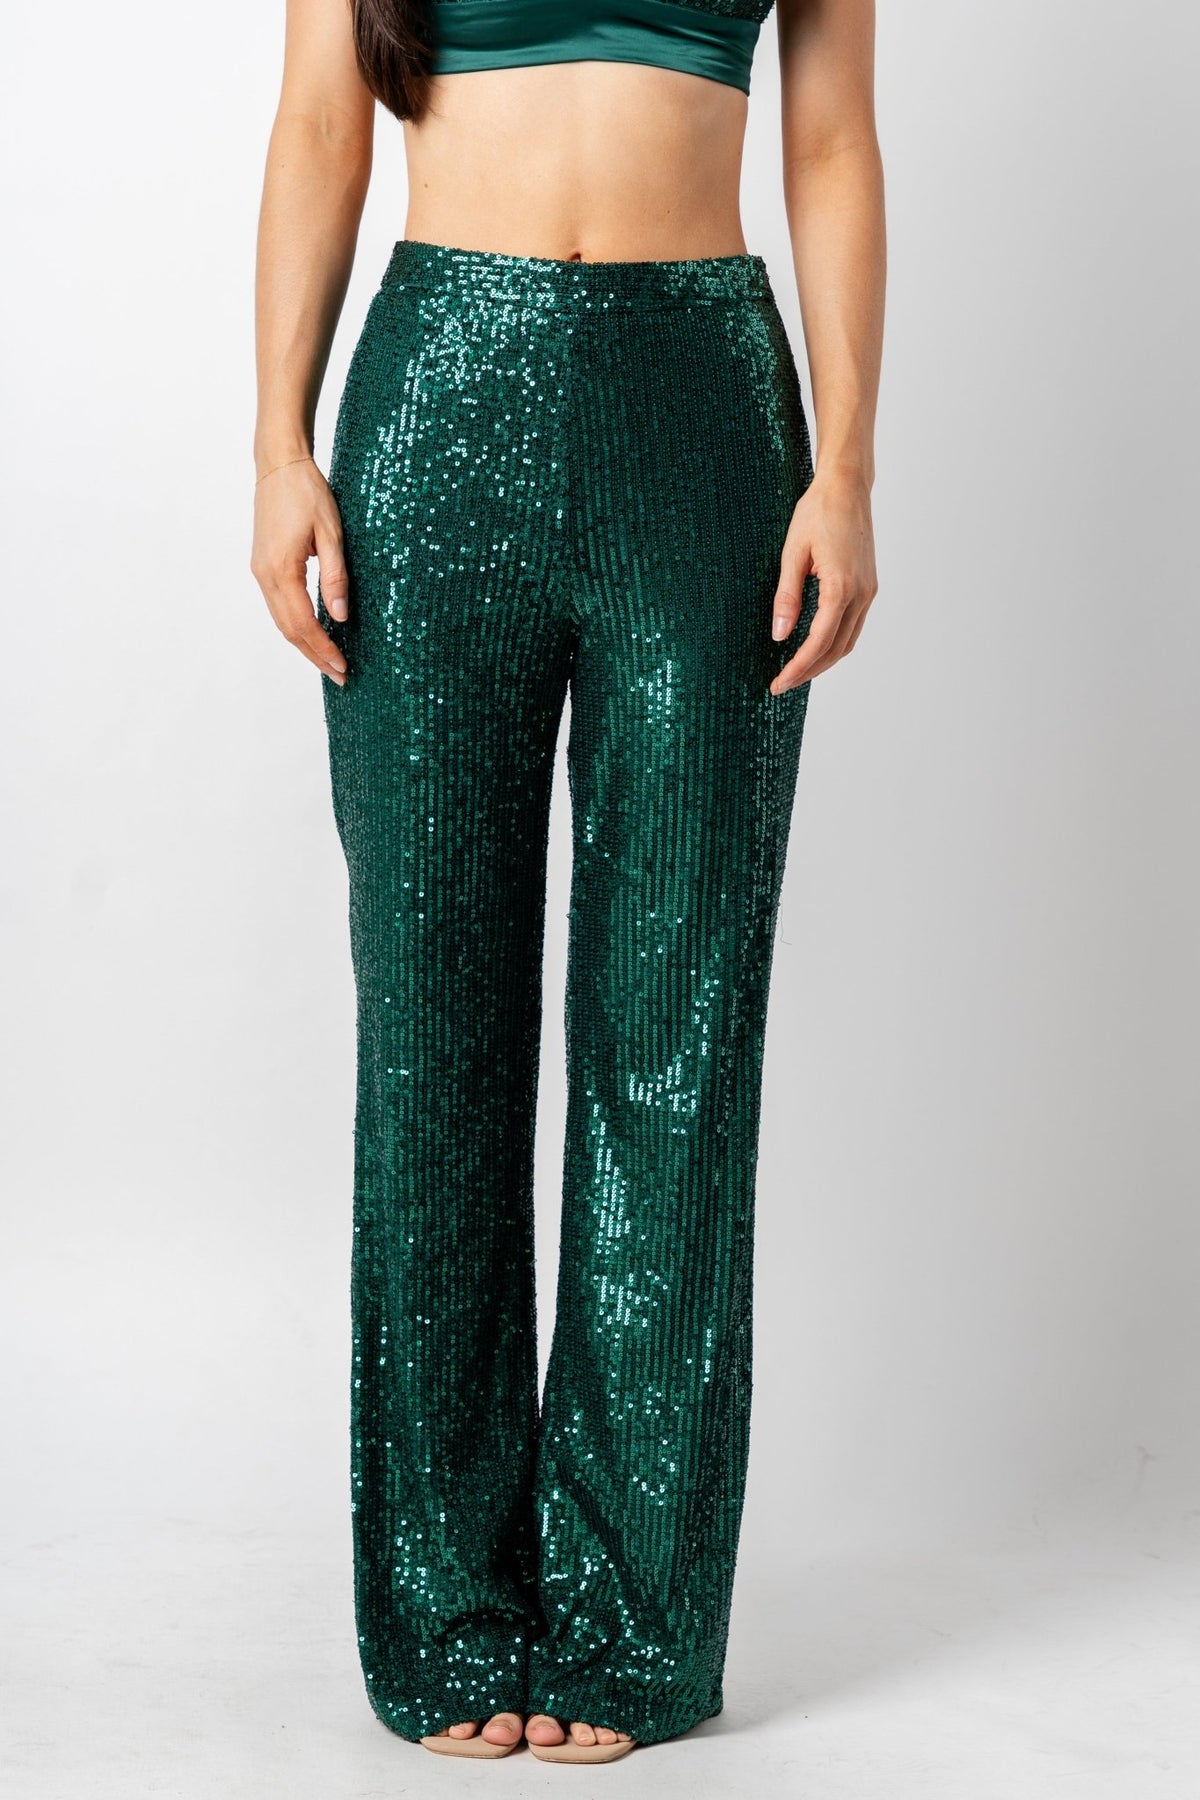 Sequin wide leg pants green | Lush Fashion Lounge: women's boutique pants, boutique women's pants, affordable boutique pants, women's fashion pants